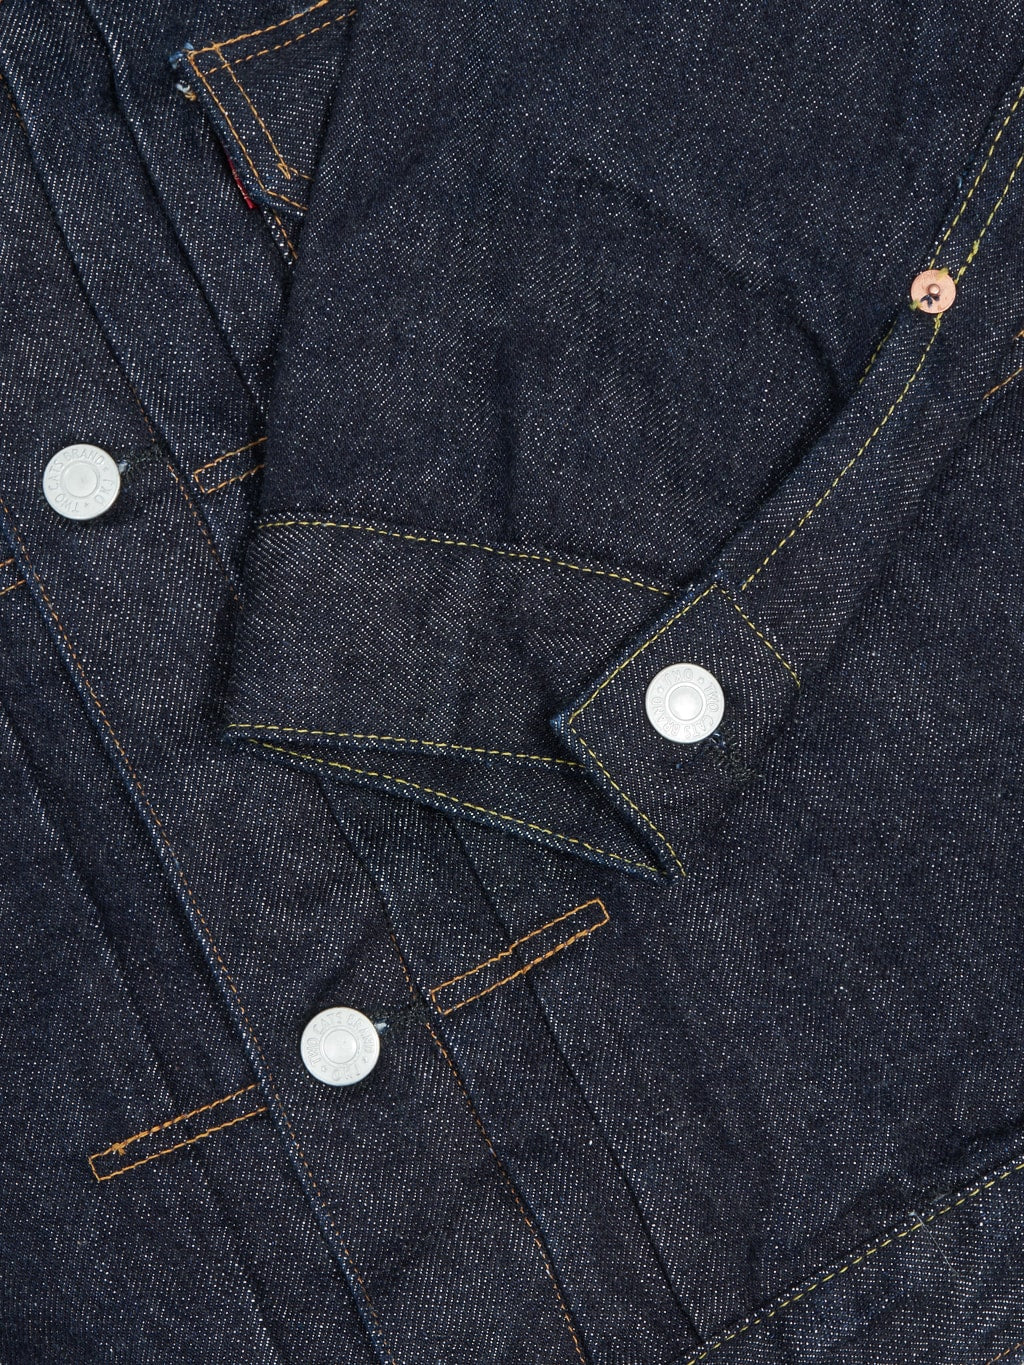 tcb 30s denim jacket sleeve cuff details